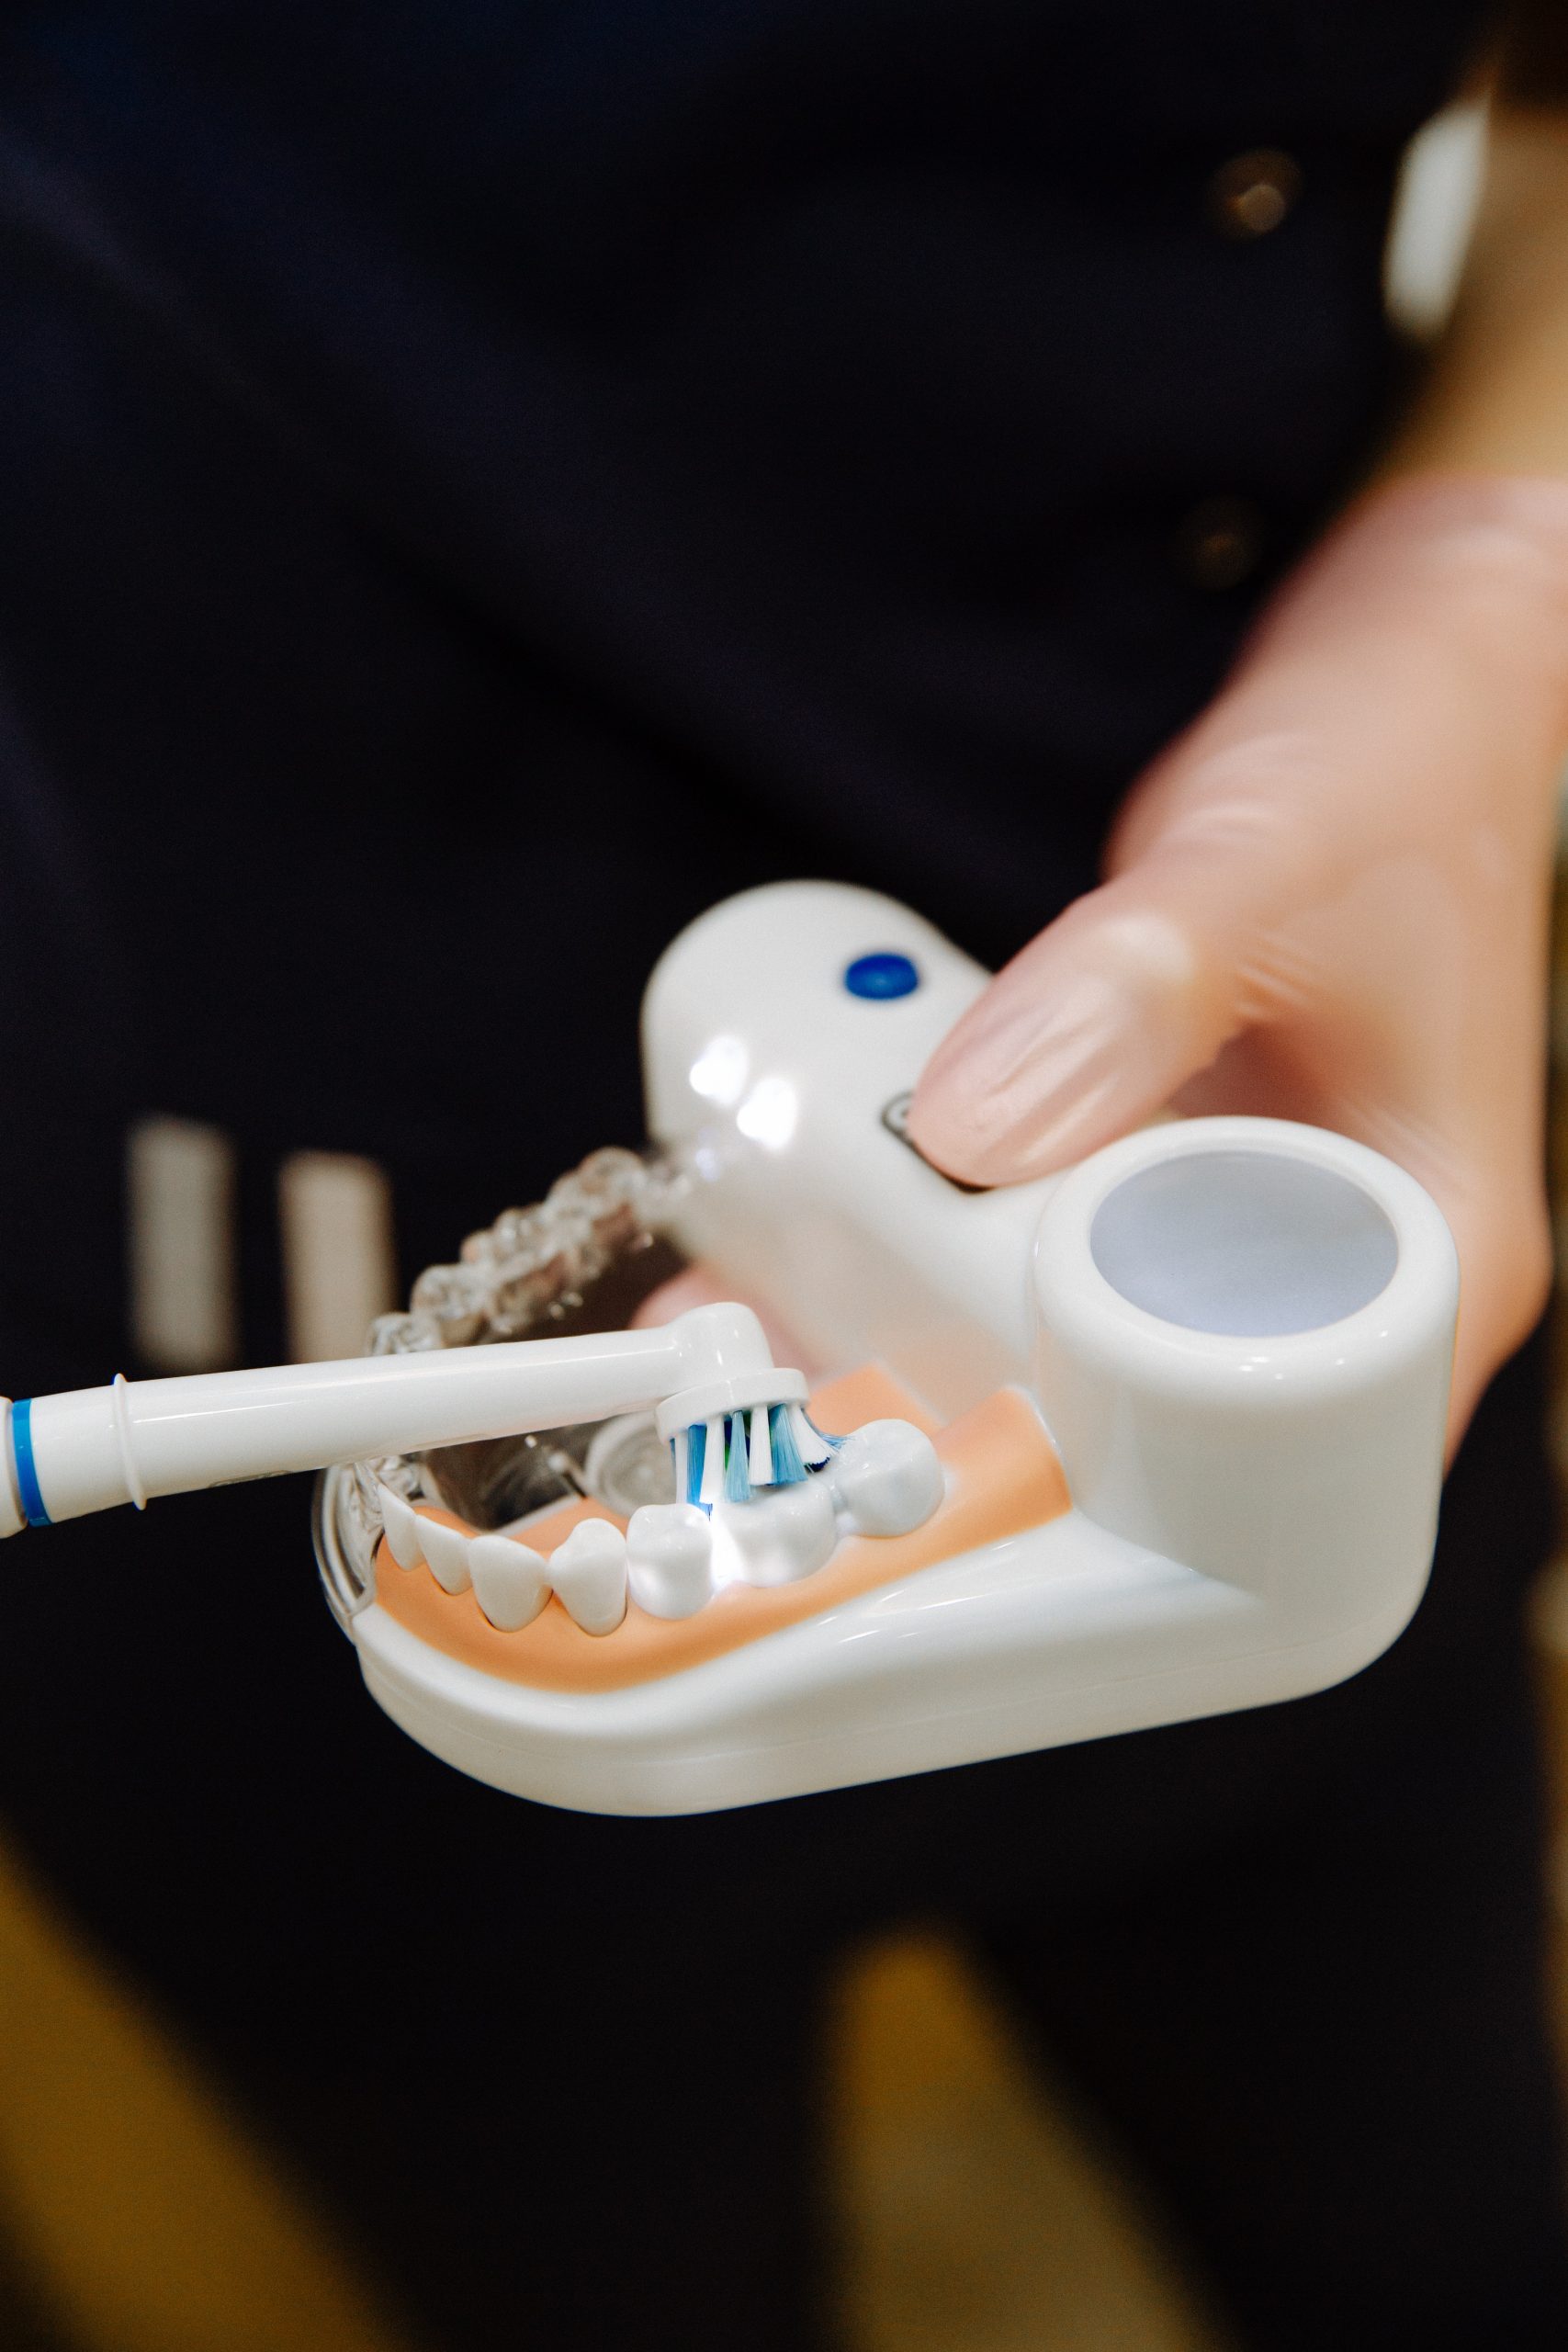 teeth whitening - cleaning false teeth